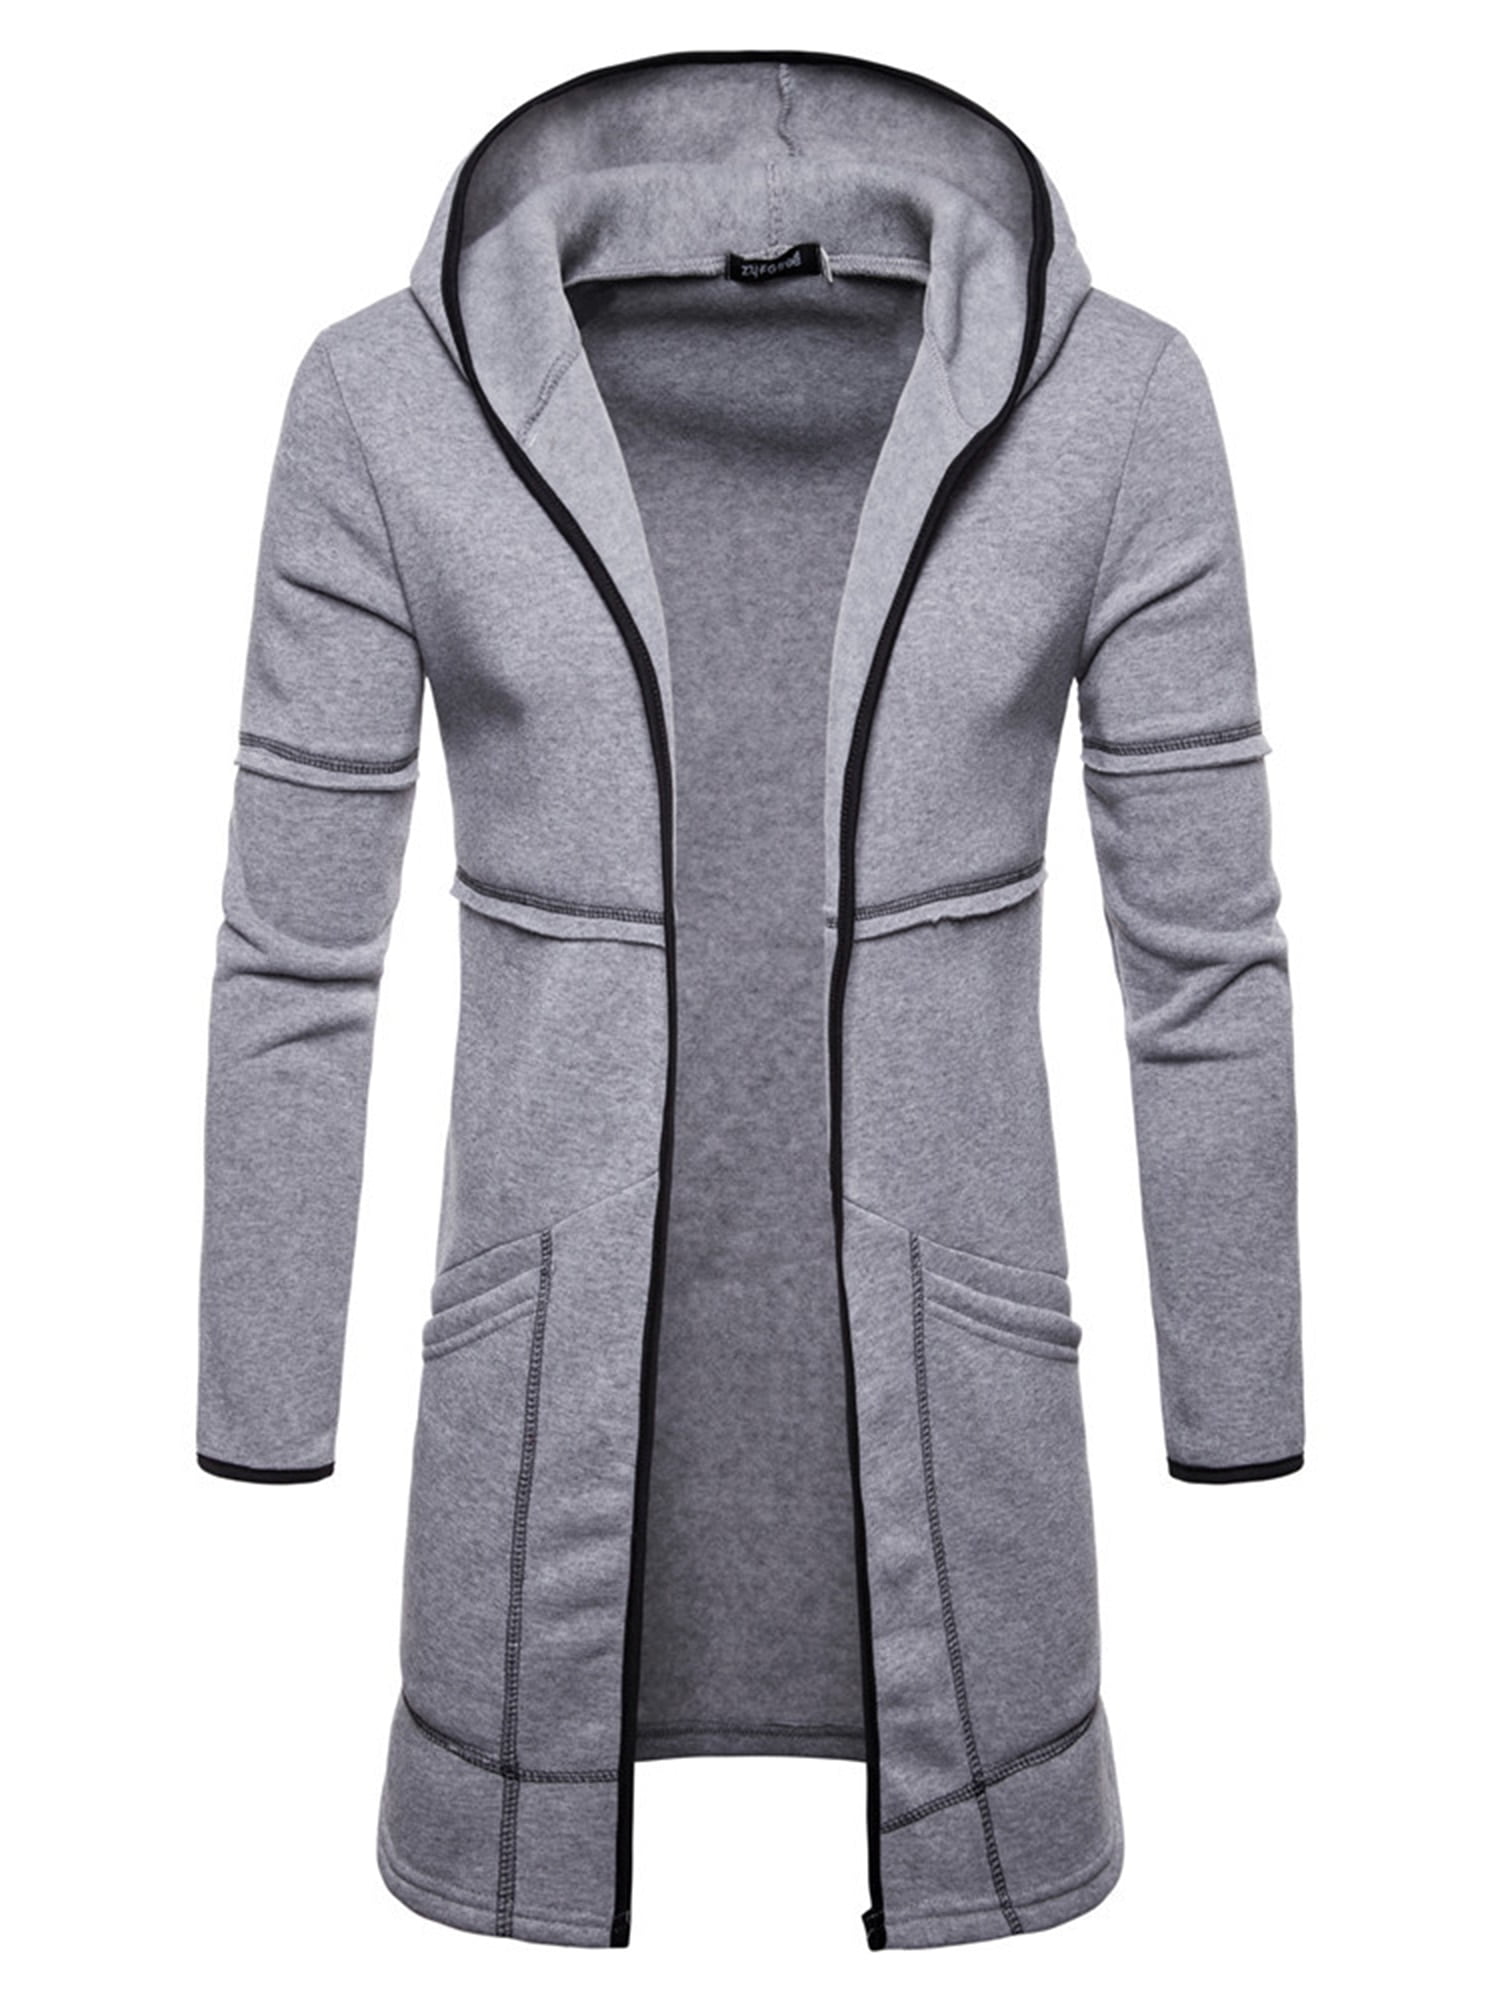 Mens Casual Coats Clearance Toamen Autumn Winter Warm Zipper Slim Long Hooded Trench Jacket Cardigan Outwear Blouse